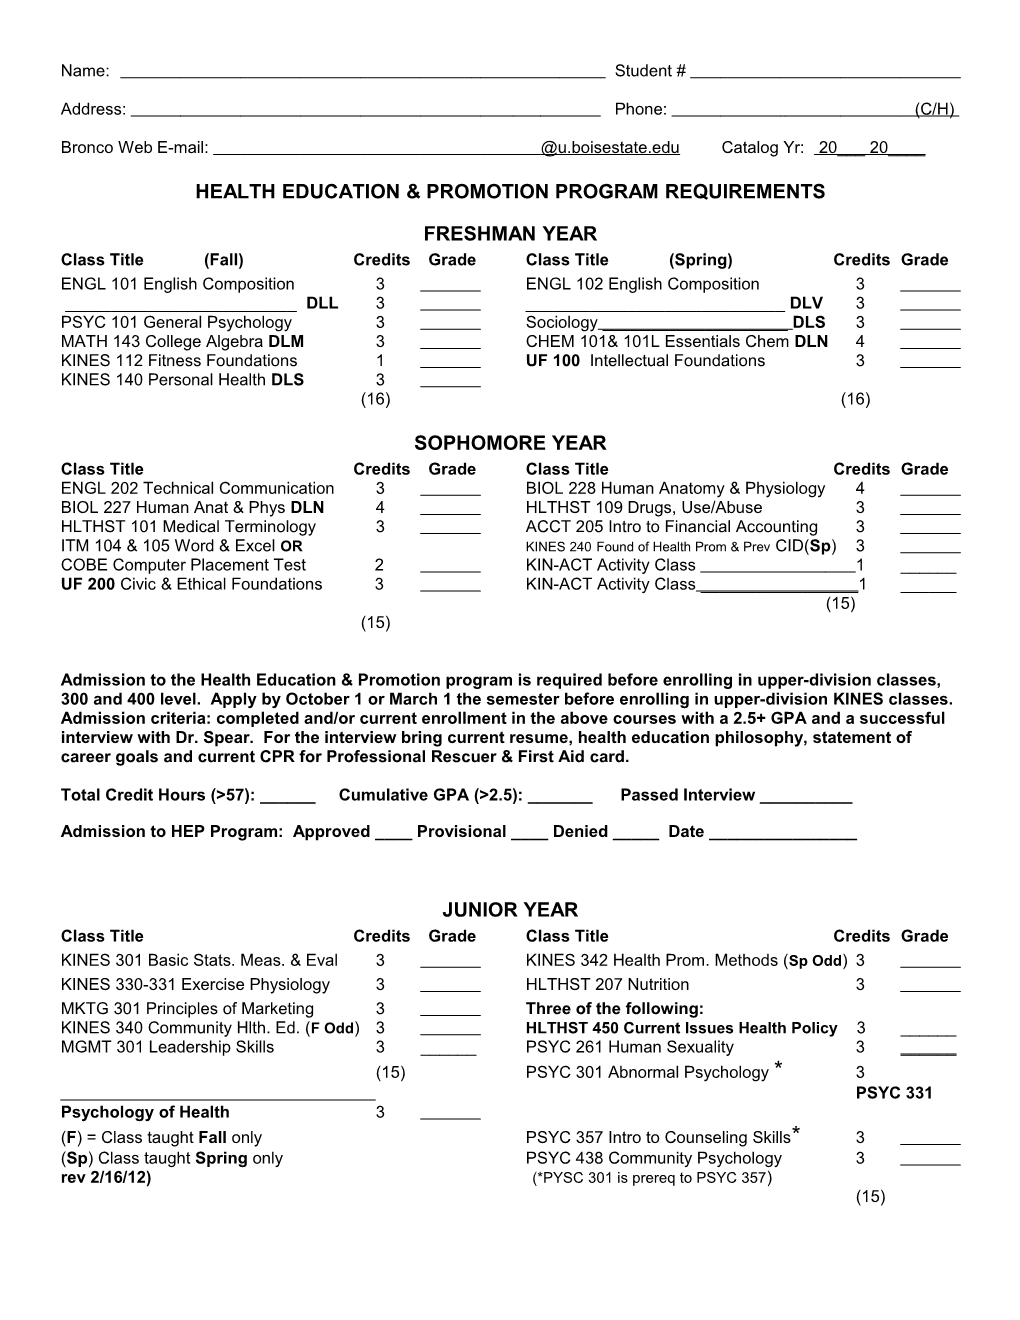 Health Education & Promotion Program Requirements